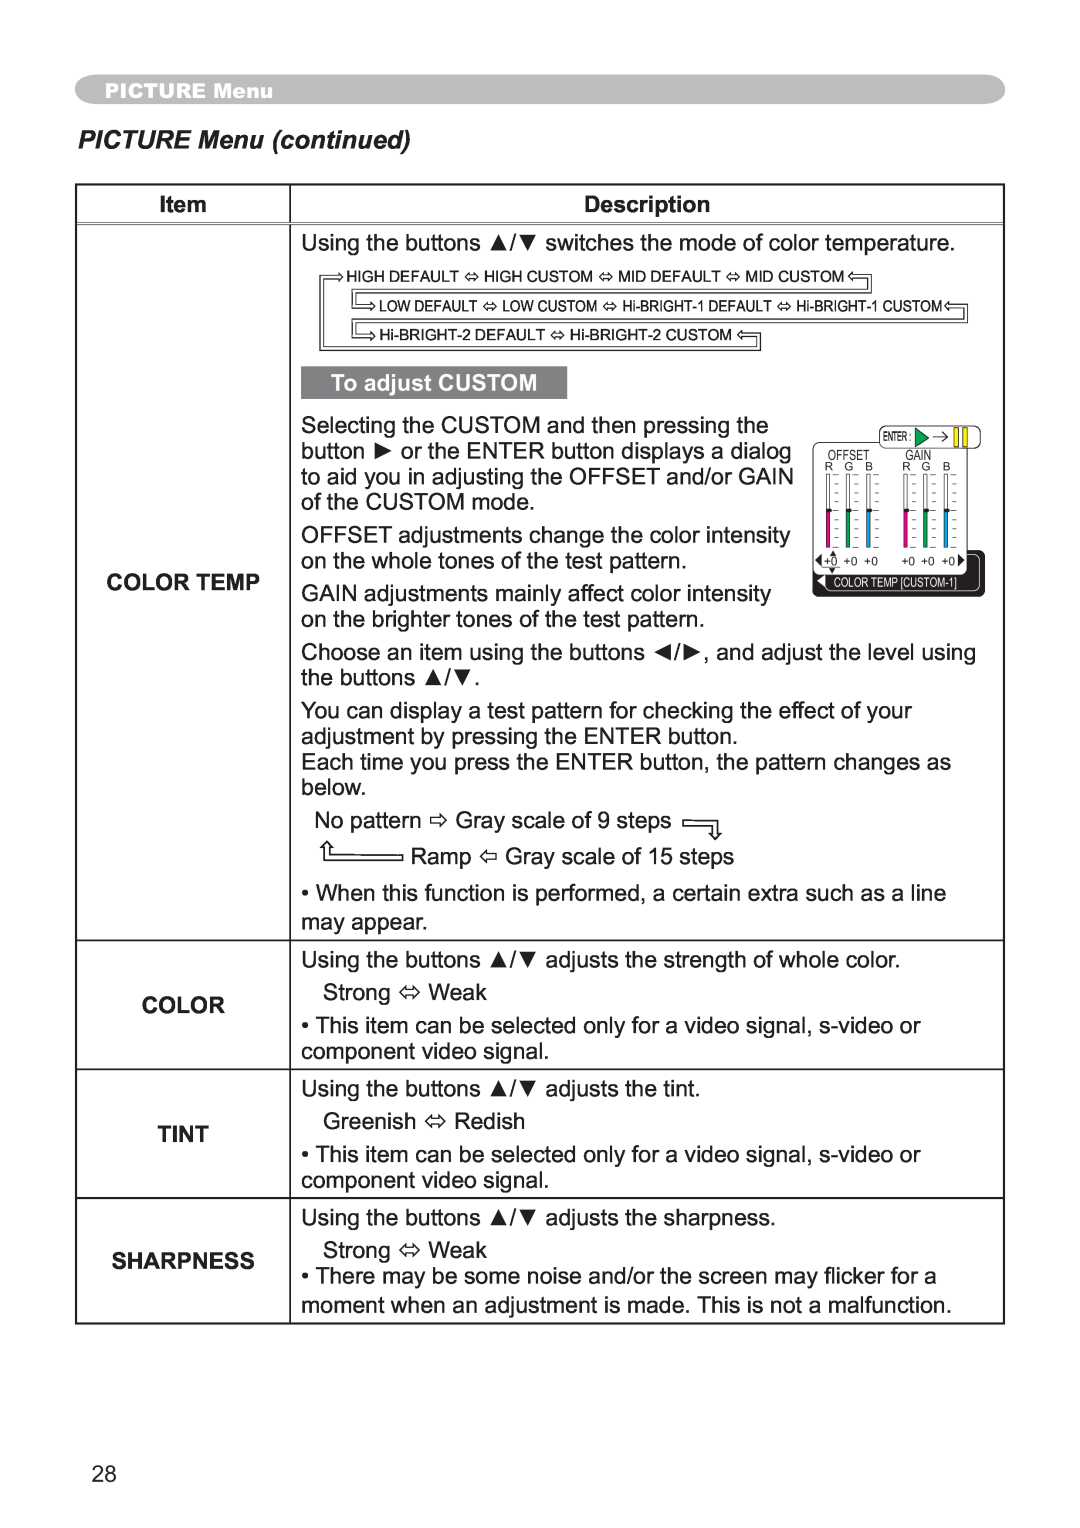 Hitachi CP-X251 user manual PICTURE Menu continued, Description, To adjust CUSTOM, Color Temp, Tint, Sharpness 